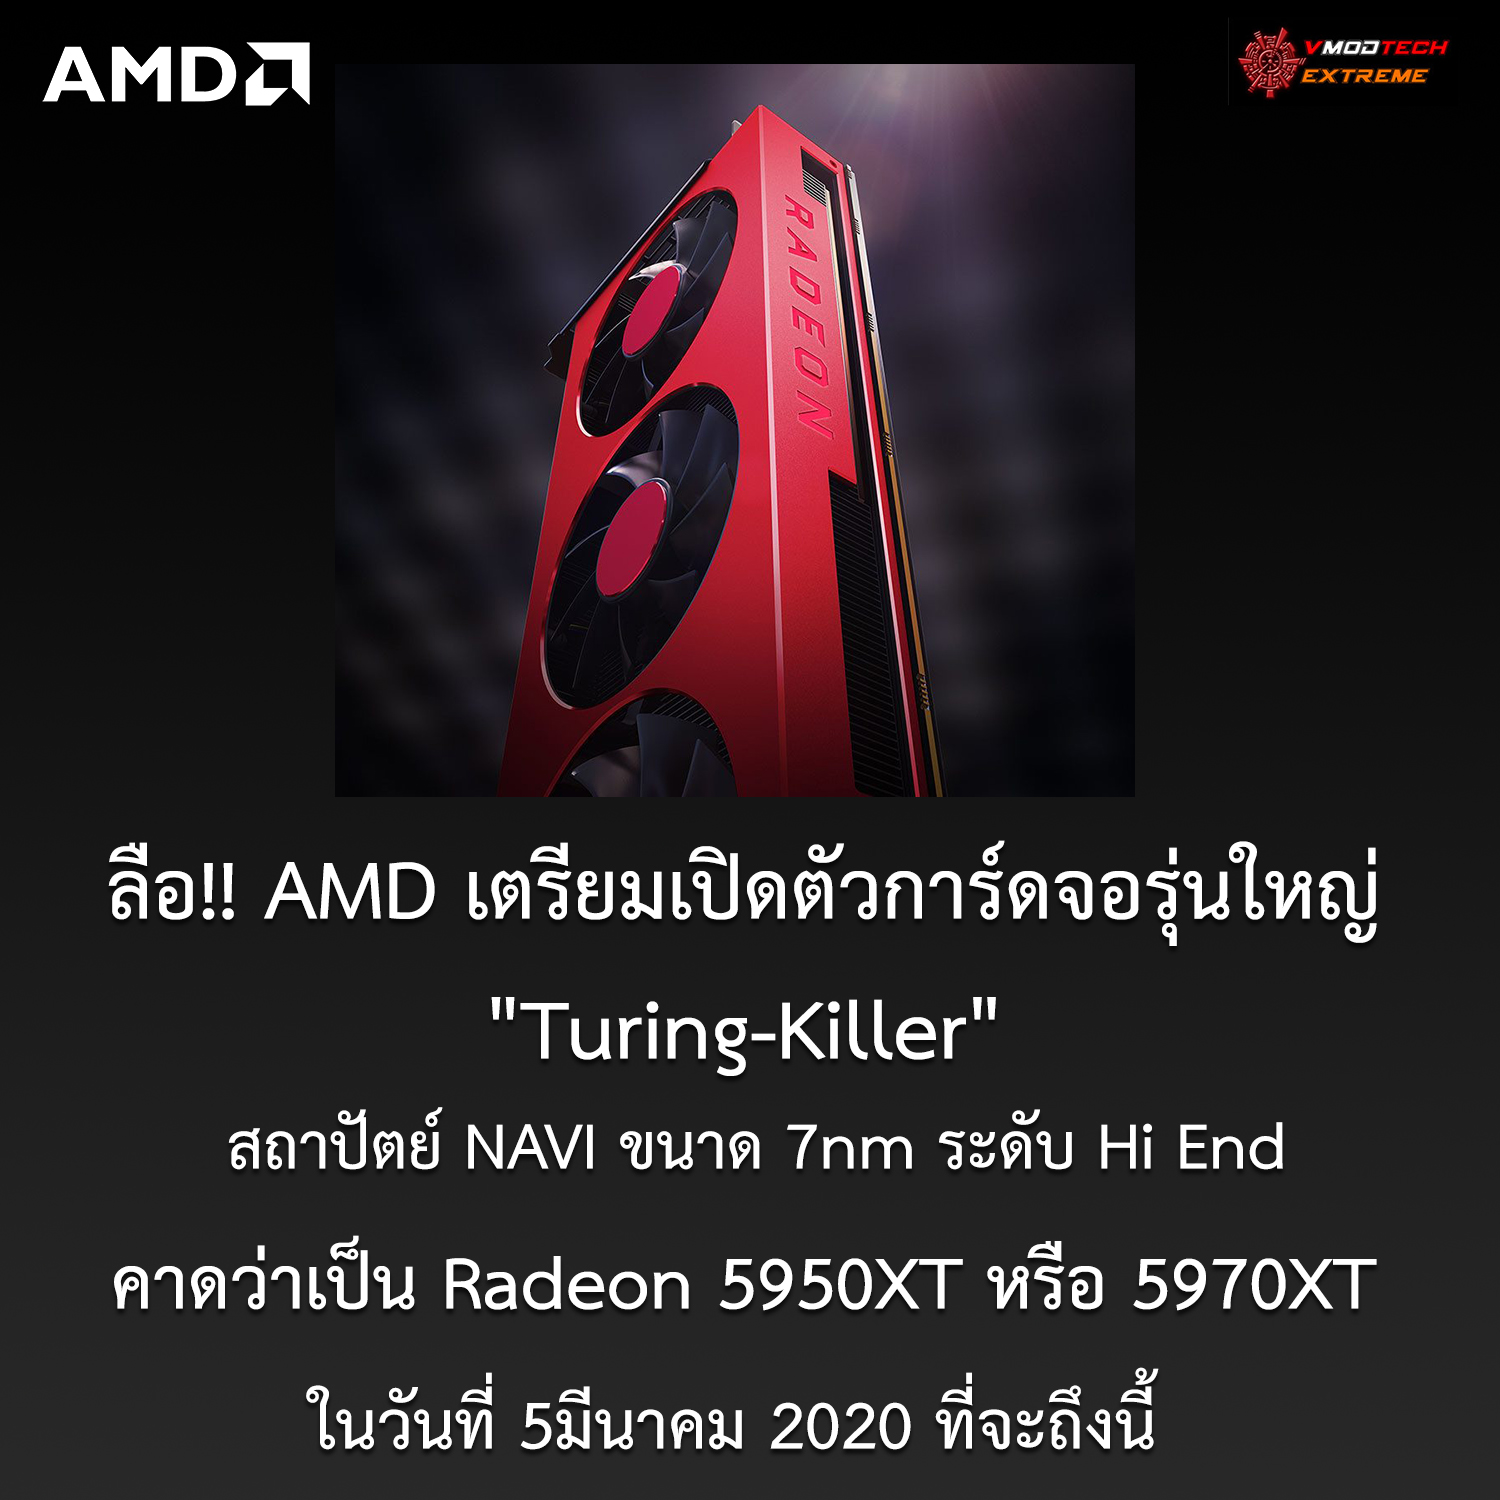 amd big navi 7nm ลือ!! AMD เตรียมเปิดตัวการ์ดจอรุ่นใหญ่ Turing Killer สถาปัตย์ NAVI ระดับ Hi End ในวันที่ 5มีนาคม 2020 ที่จะถึงนี้  